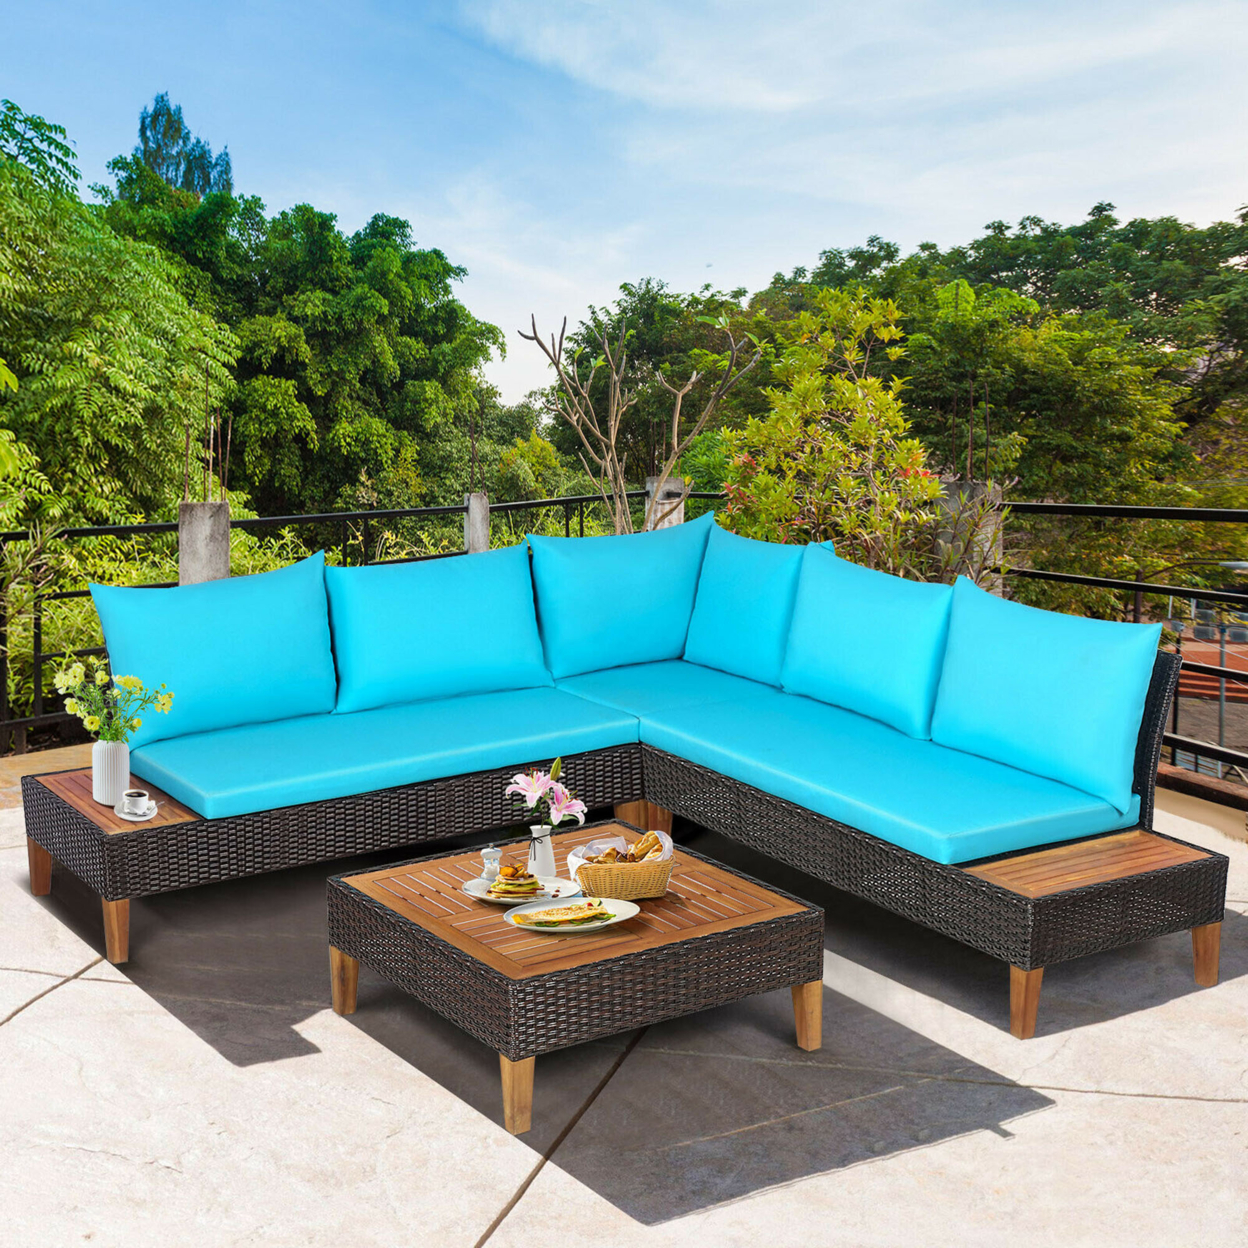 4PCS Acacia Wood Patio Furniture Set Rattan Conversation Set W/ Turquoise Cushions